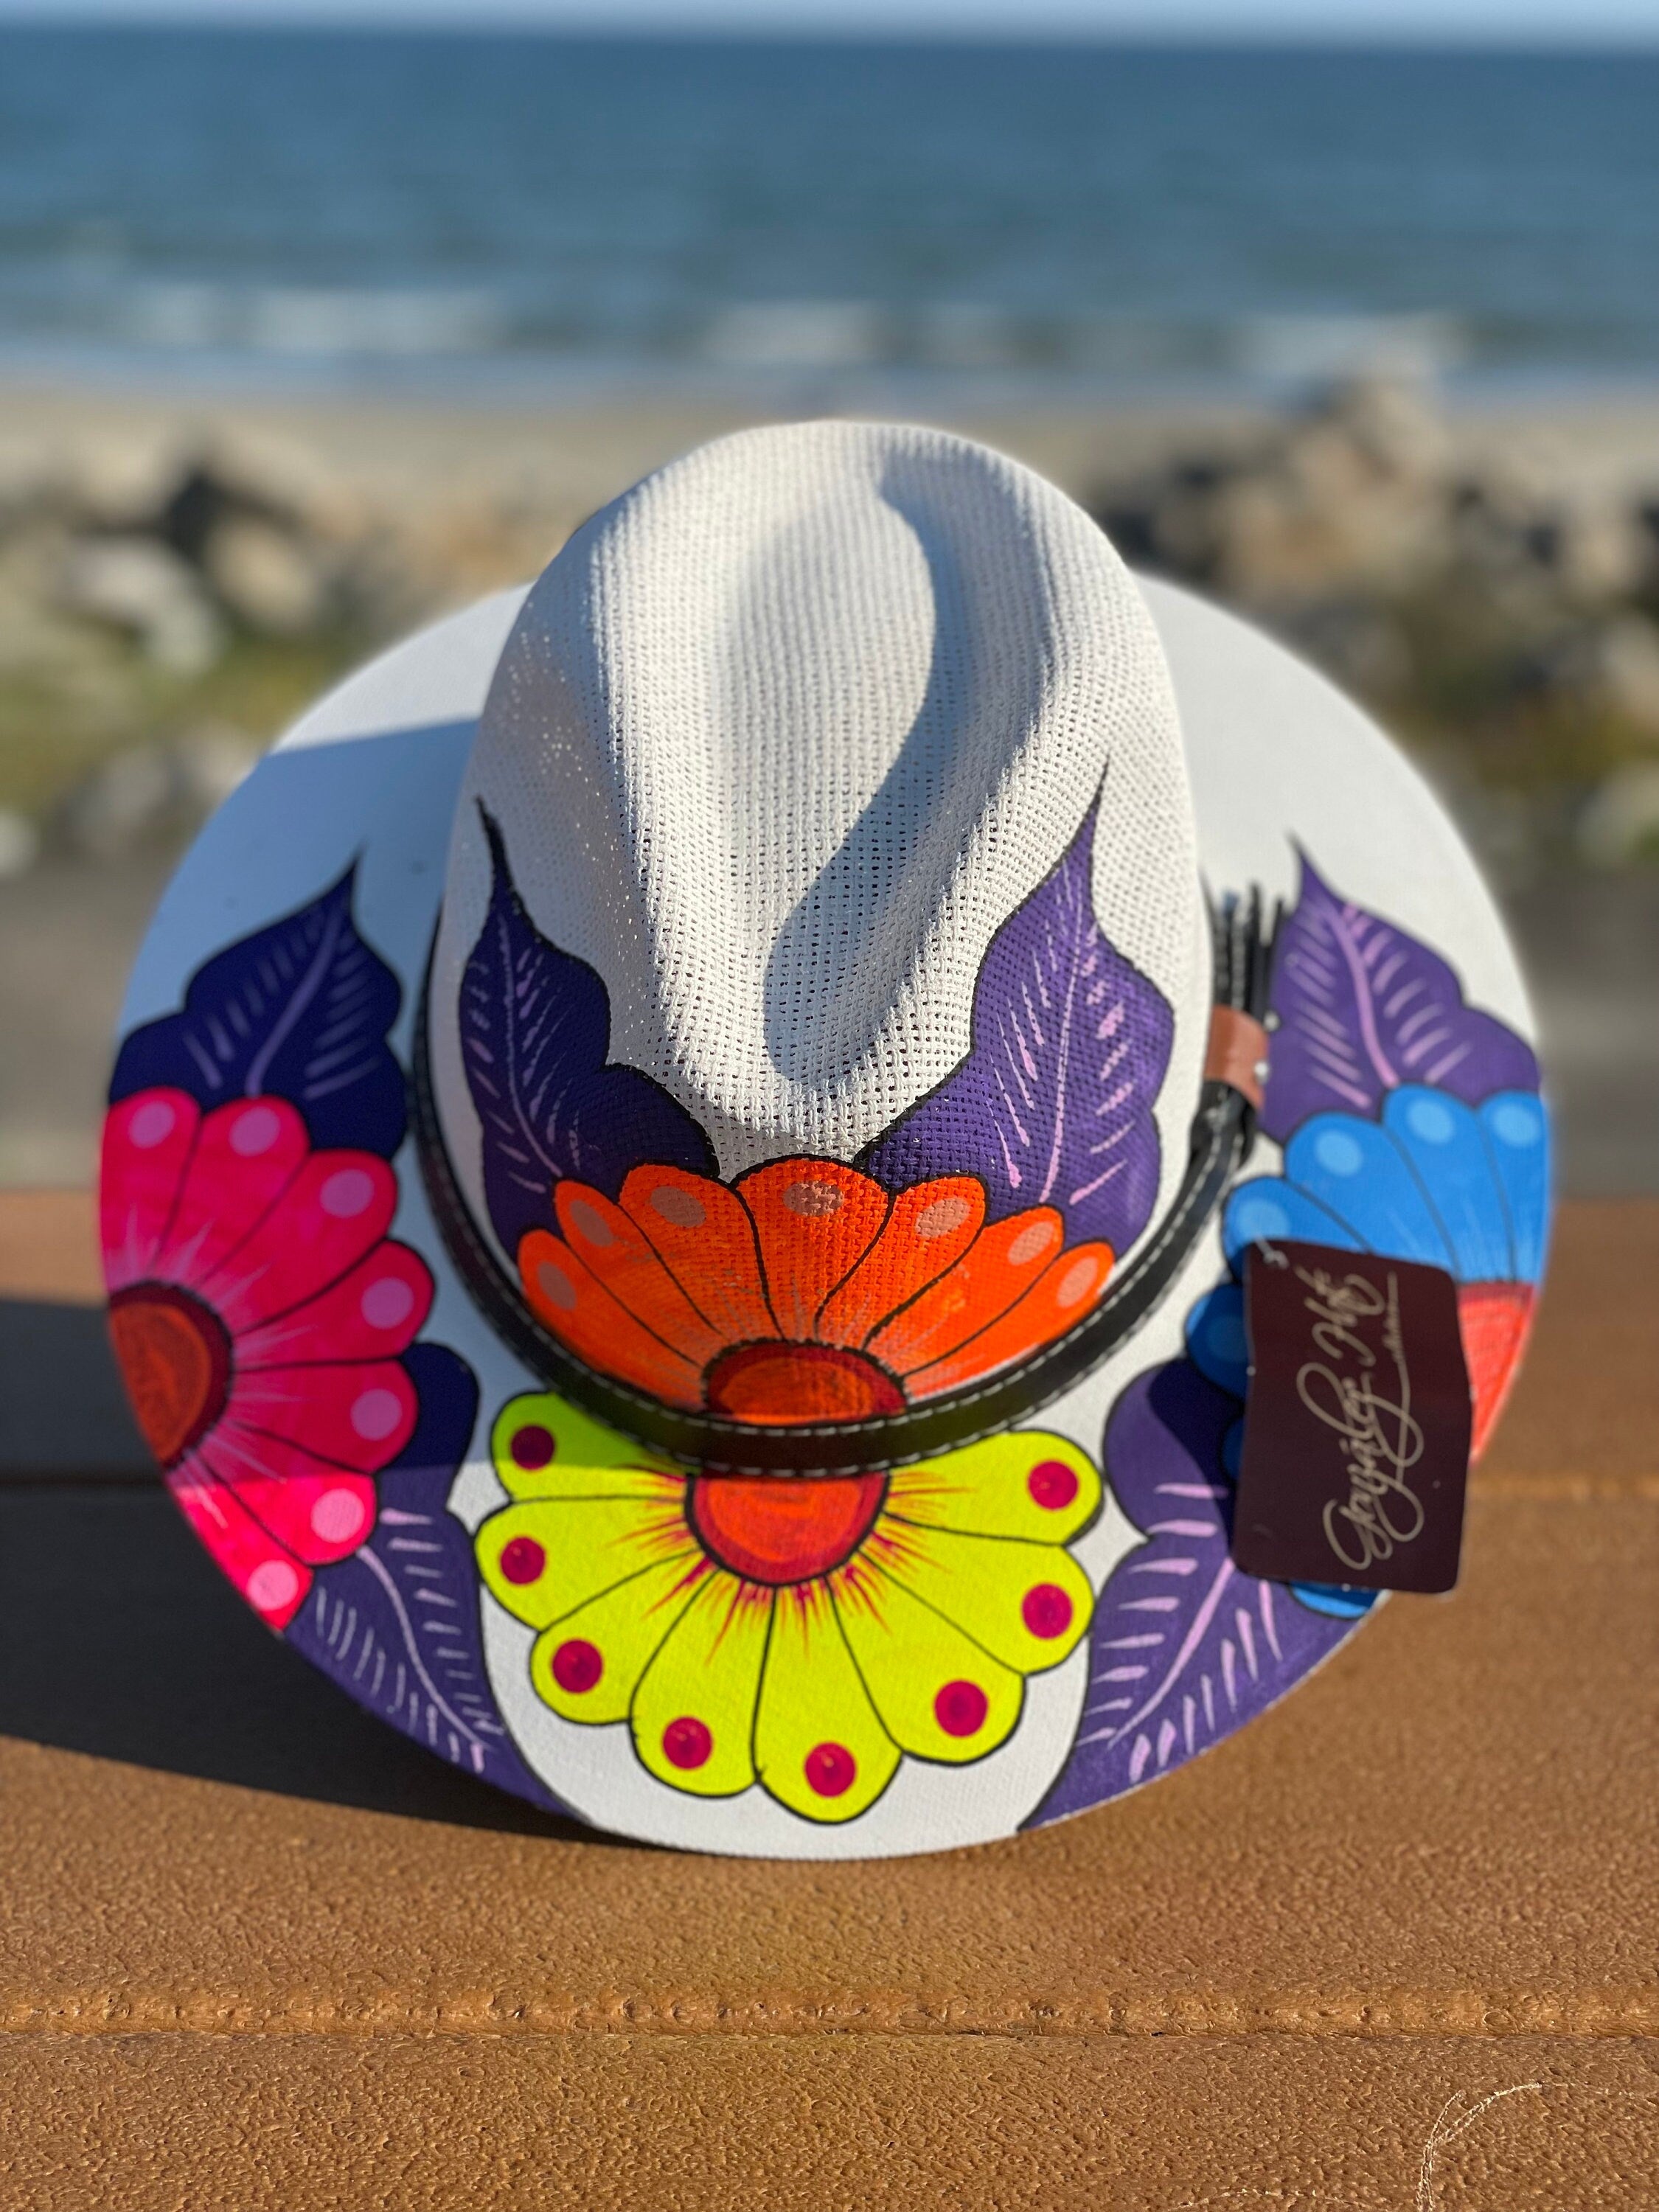 Raider Hand Painted Hats Panama Style Hats Size Large Made 